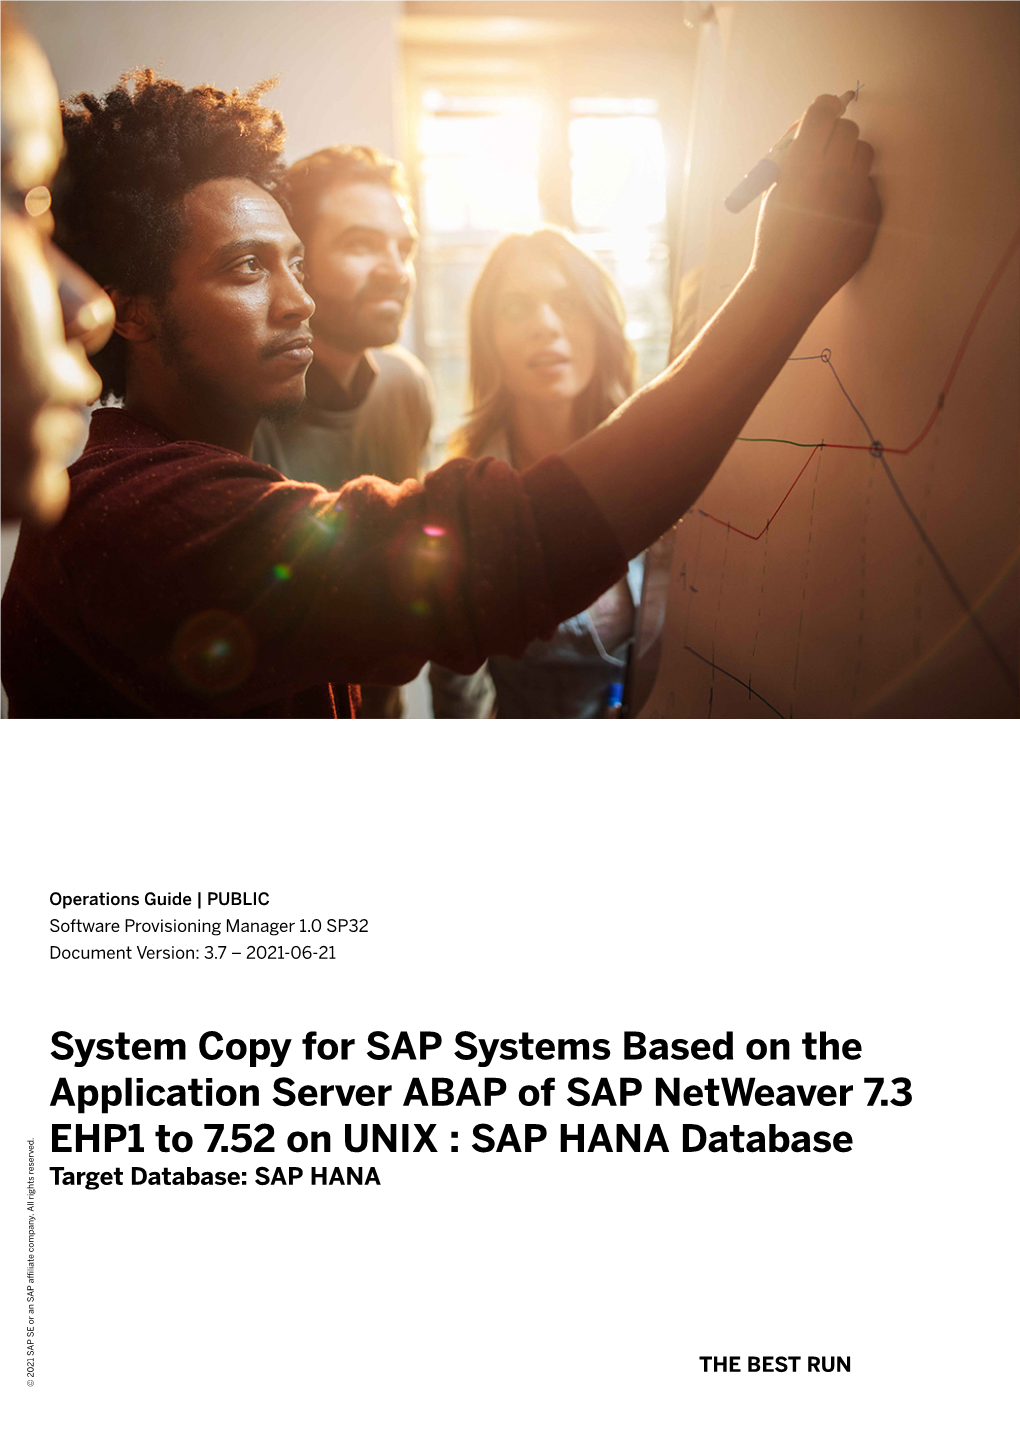 System Copy for SAP Systems Based on the Application Server ABAP of SAP Netweaver 7.3 EHP1 to 7.52 on UNIX : SAP HANA Database Target Database: SAP HANA Company